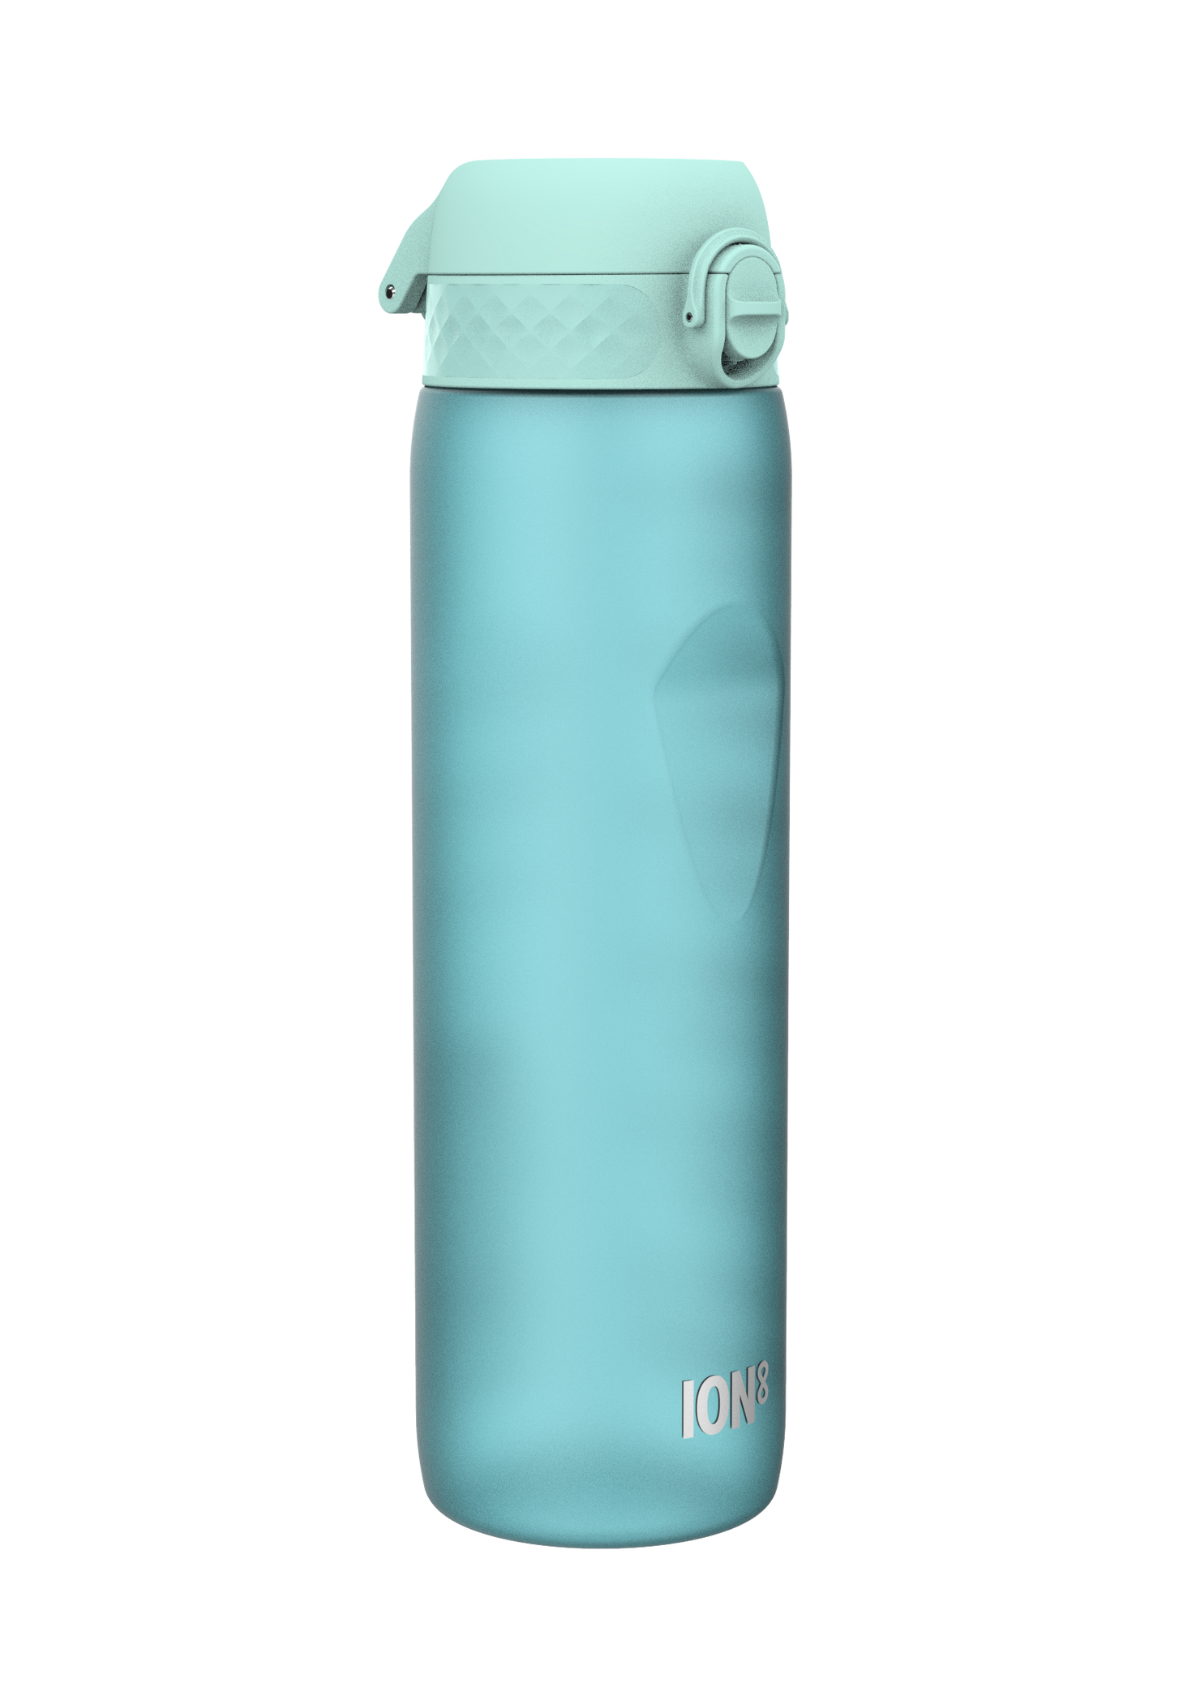 ION8 Water Bottle Quench 1000ml Leak Proof BPA Free